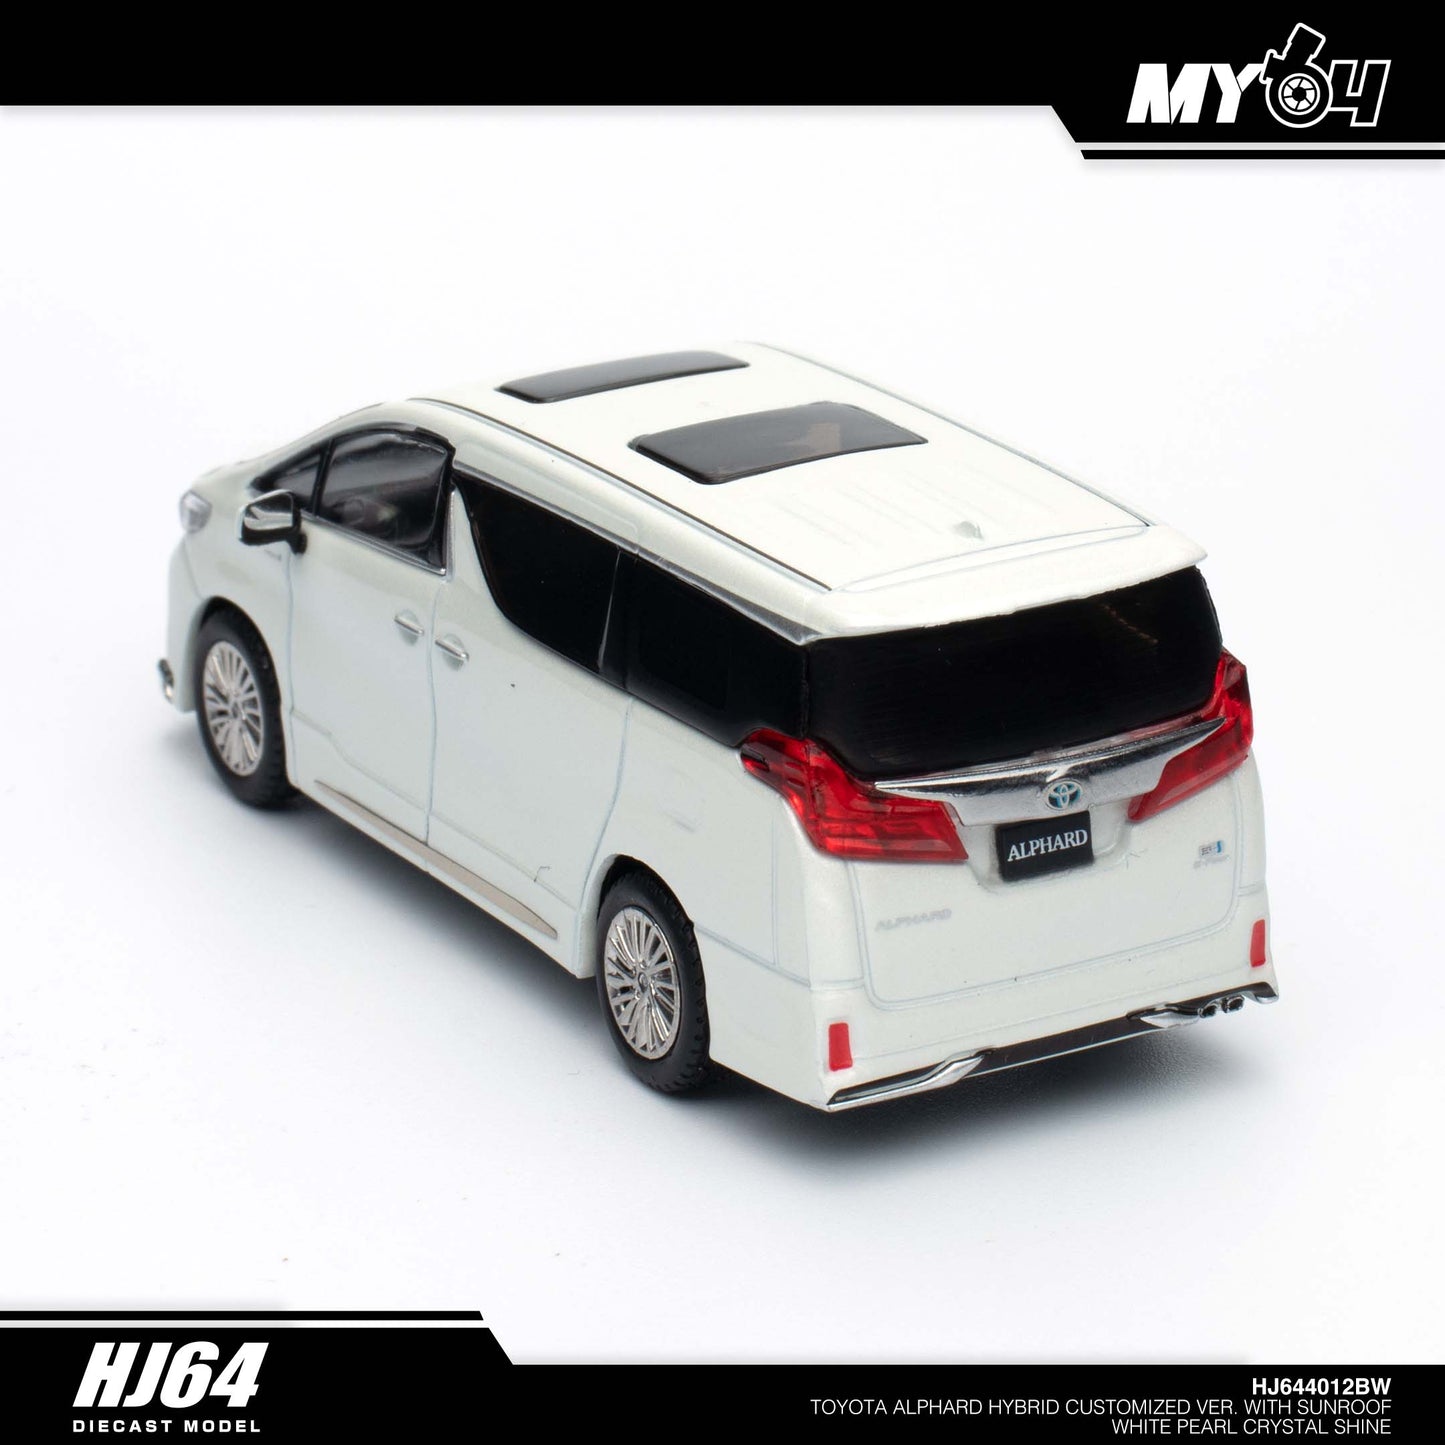 [Hobby Japan] Toyota Alphard Hybrid Customized Version With Sun Roof - White Pearl Crystal Shine